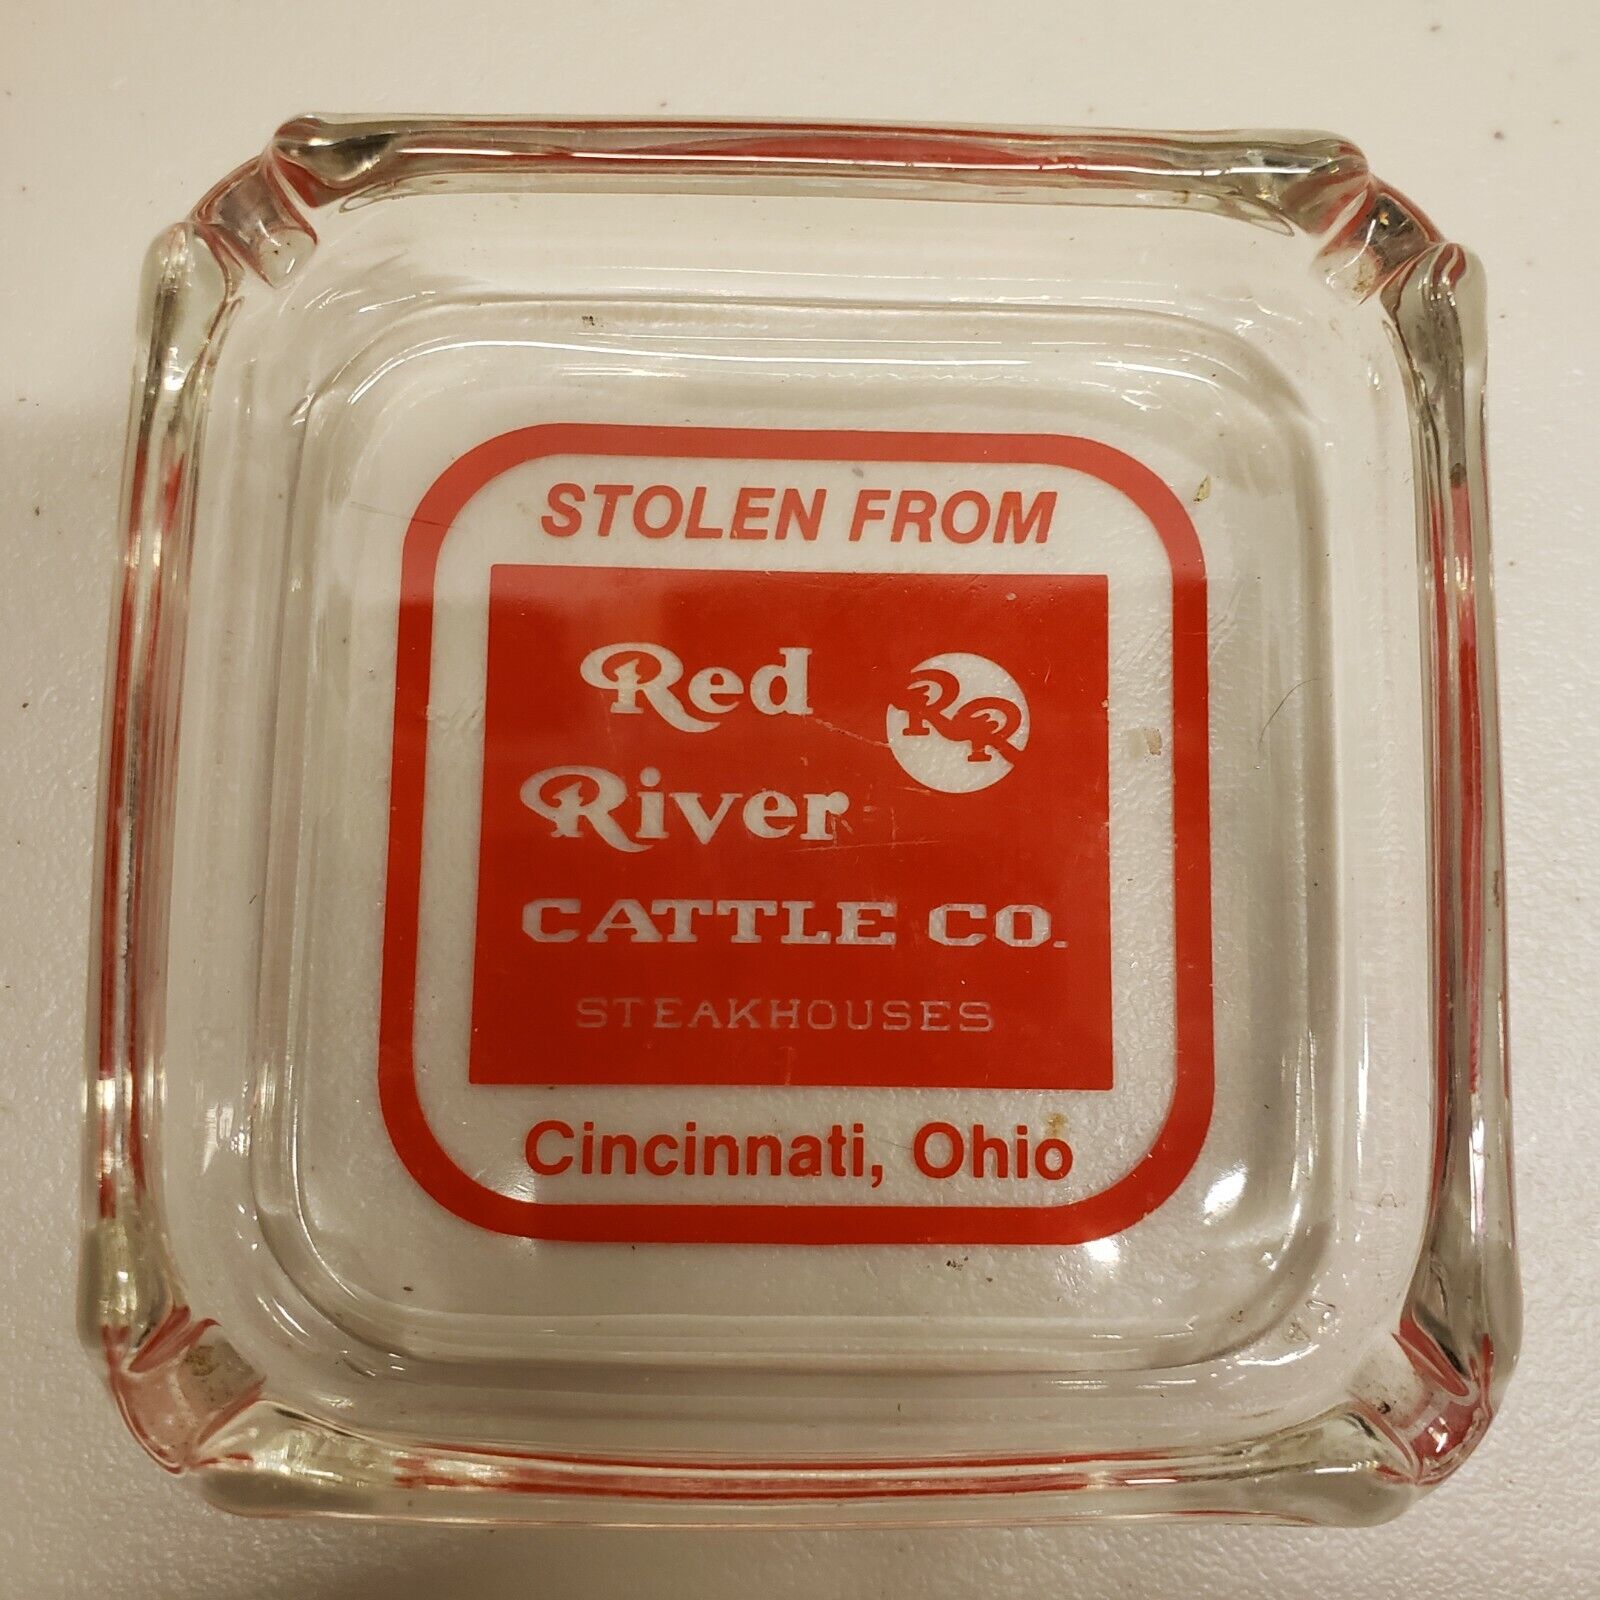 Vintage Glass Ashtray - Red River Cattle Co Steakhouses - Cincinnati Ohio 